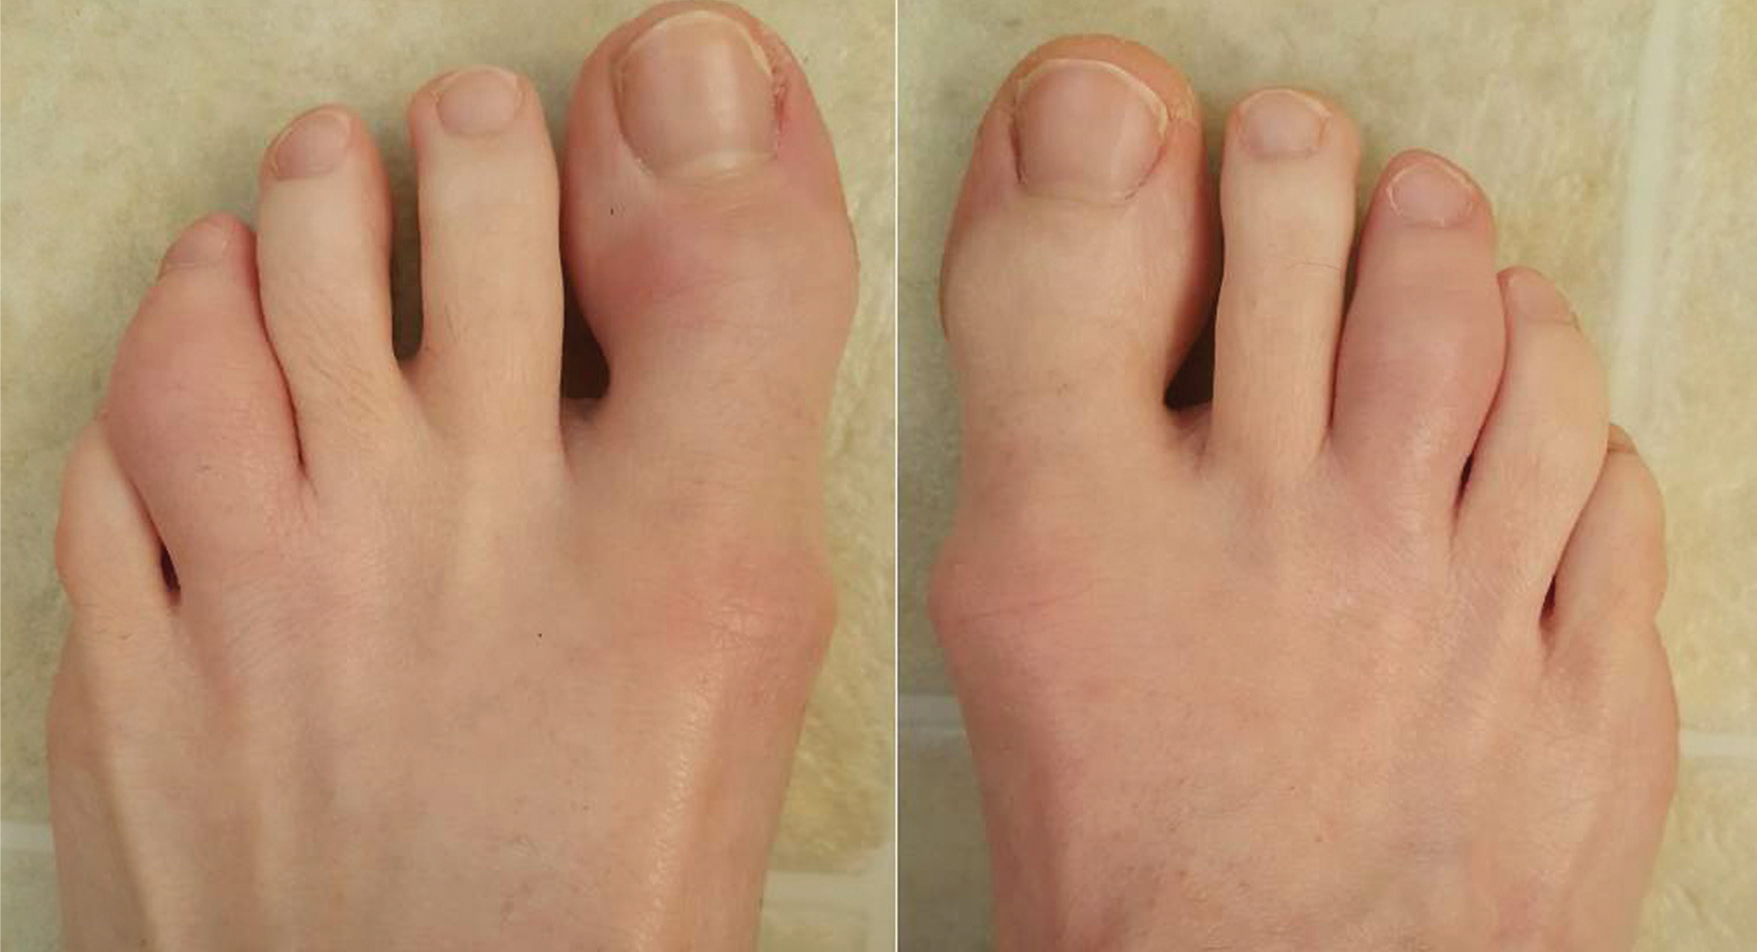 arthritis in little toe